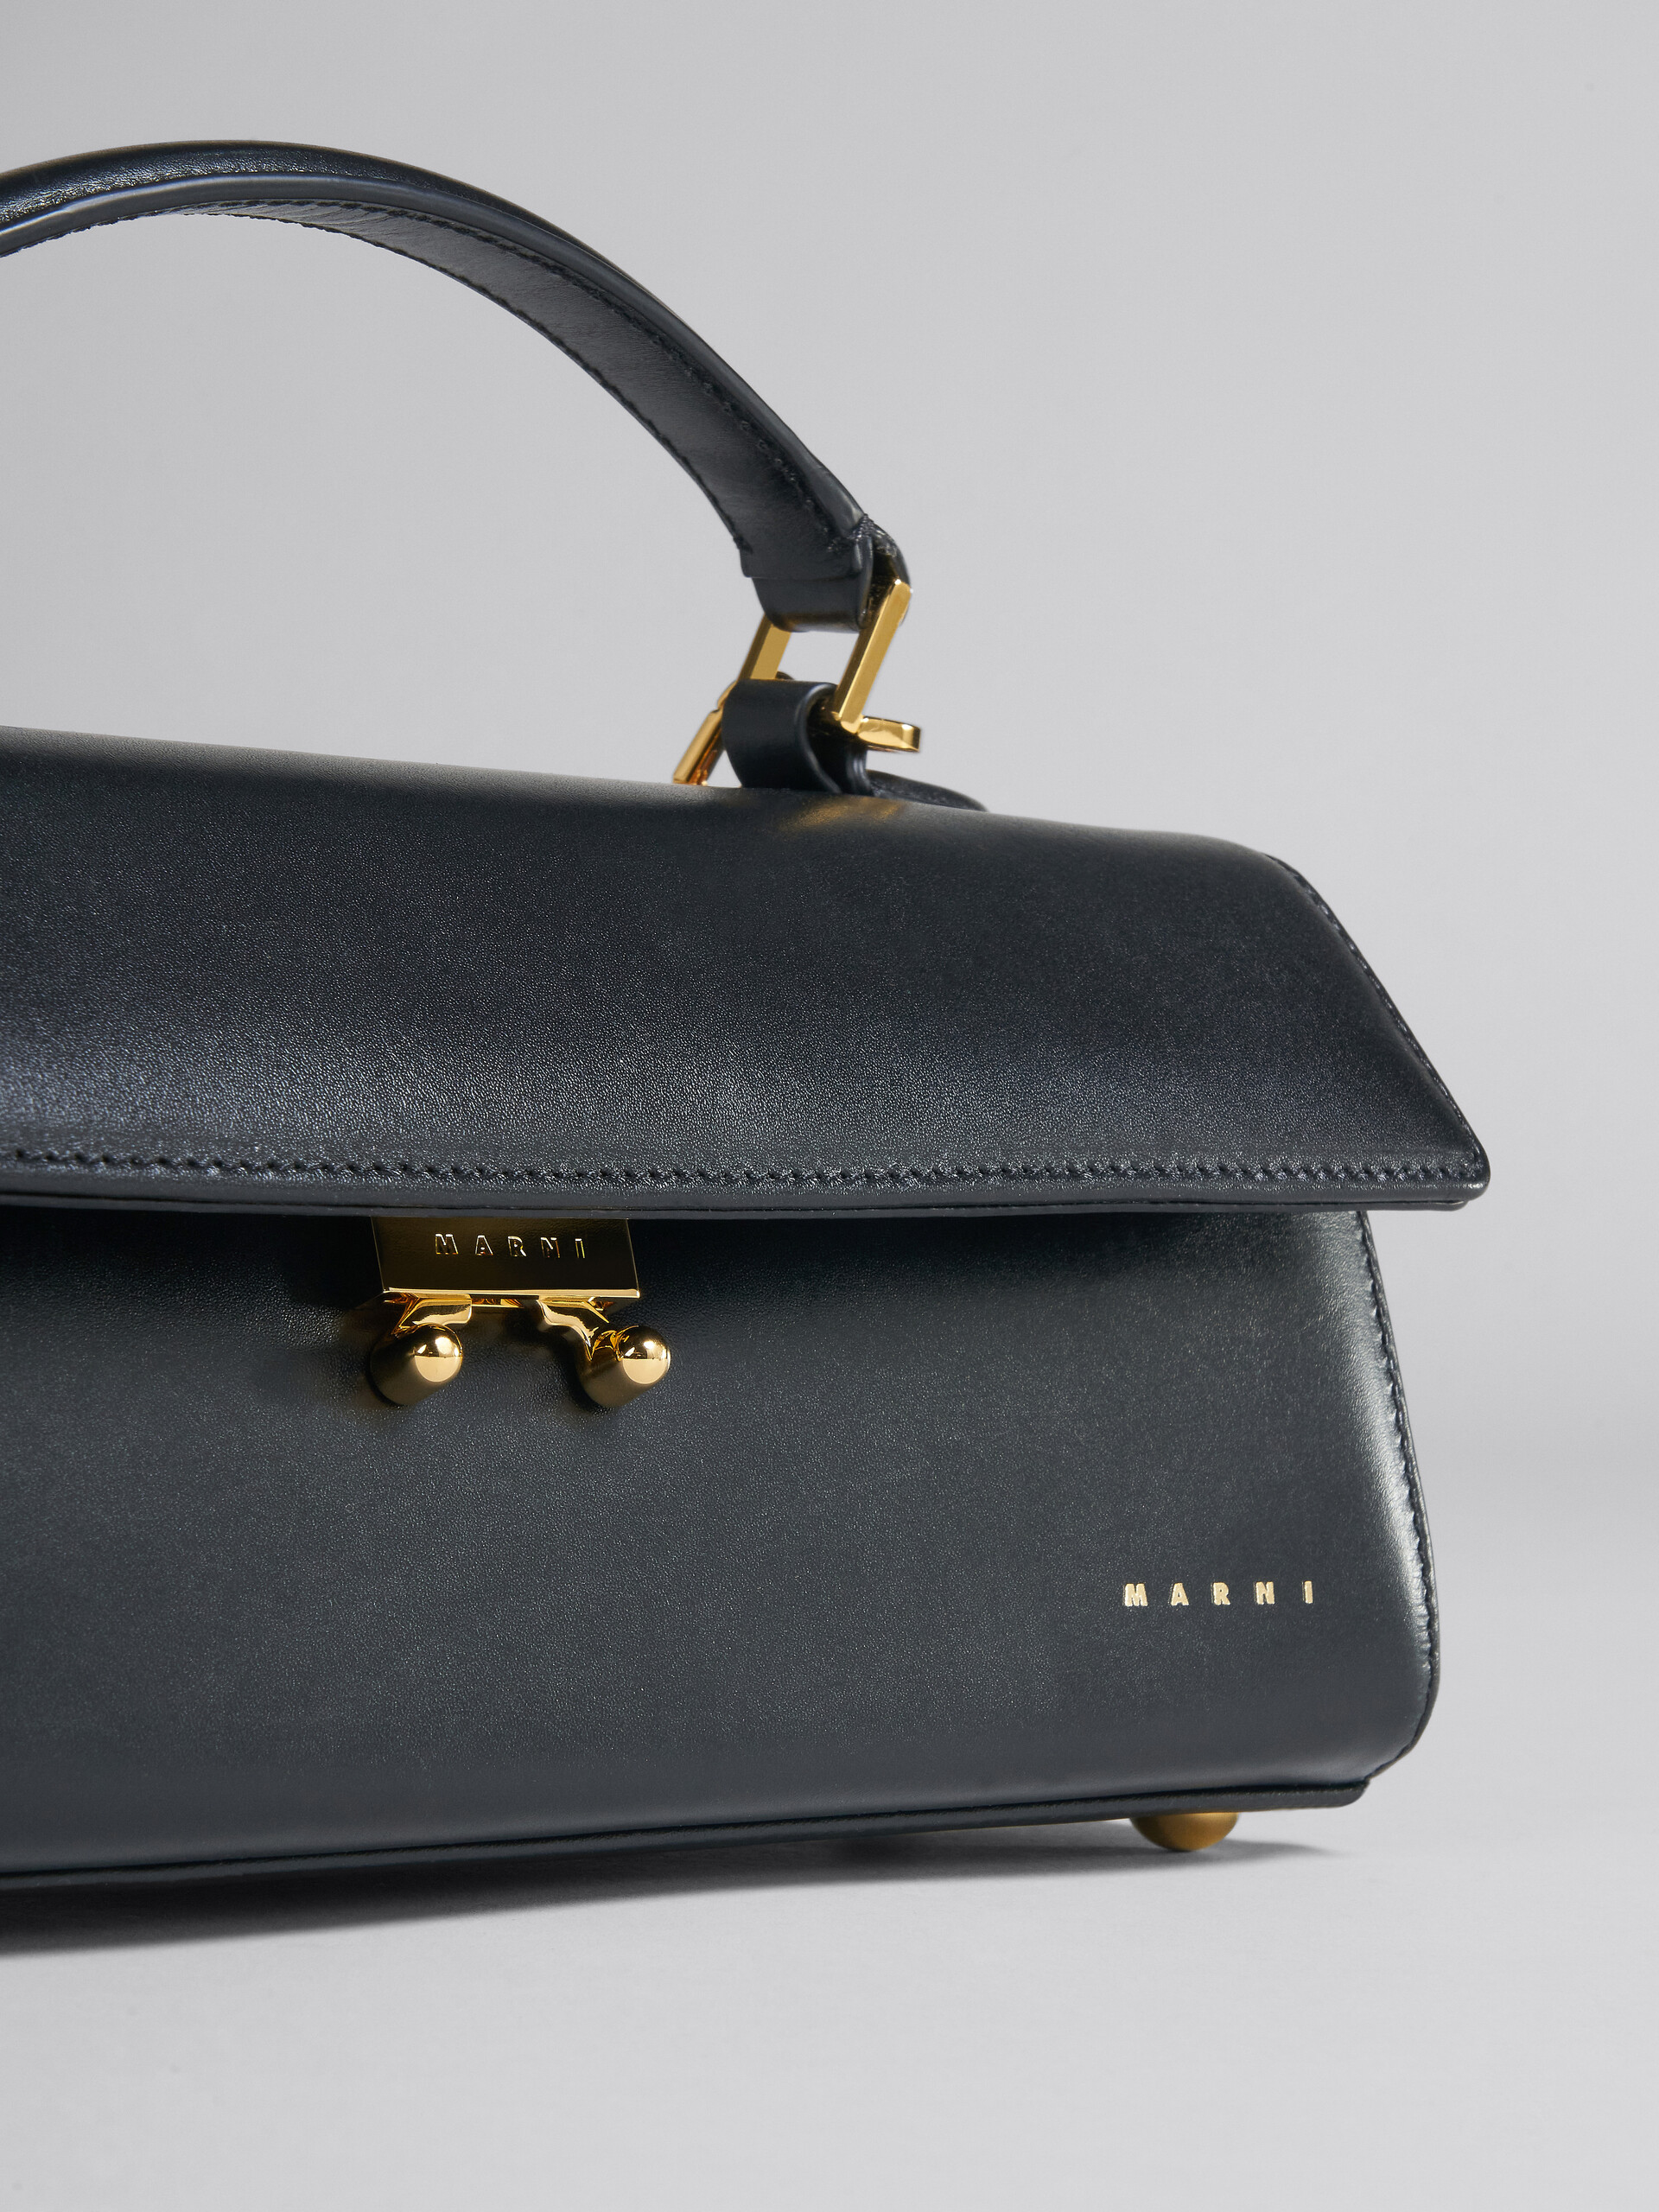 Relativity Medium Bag in black leather - Handbag - Image 5